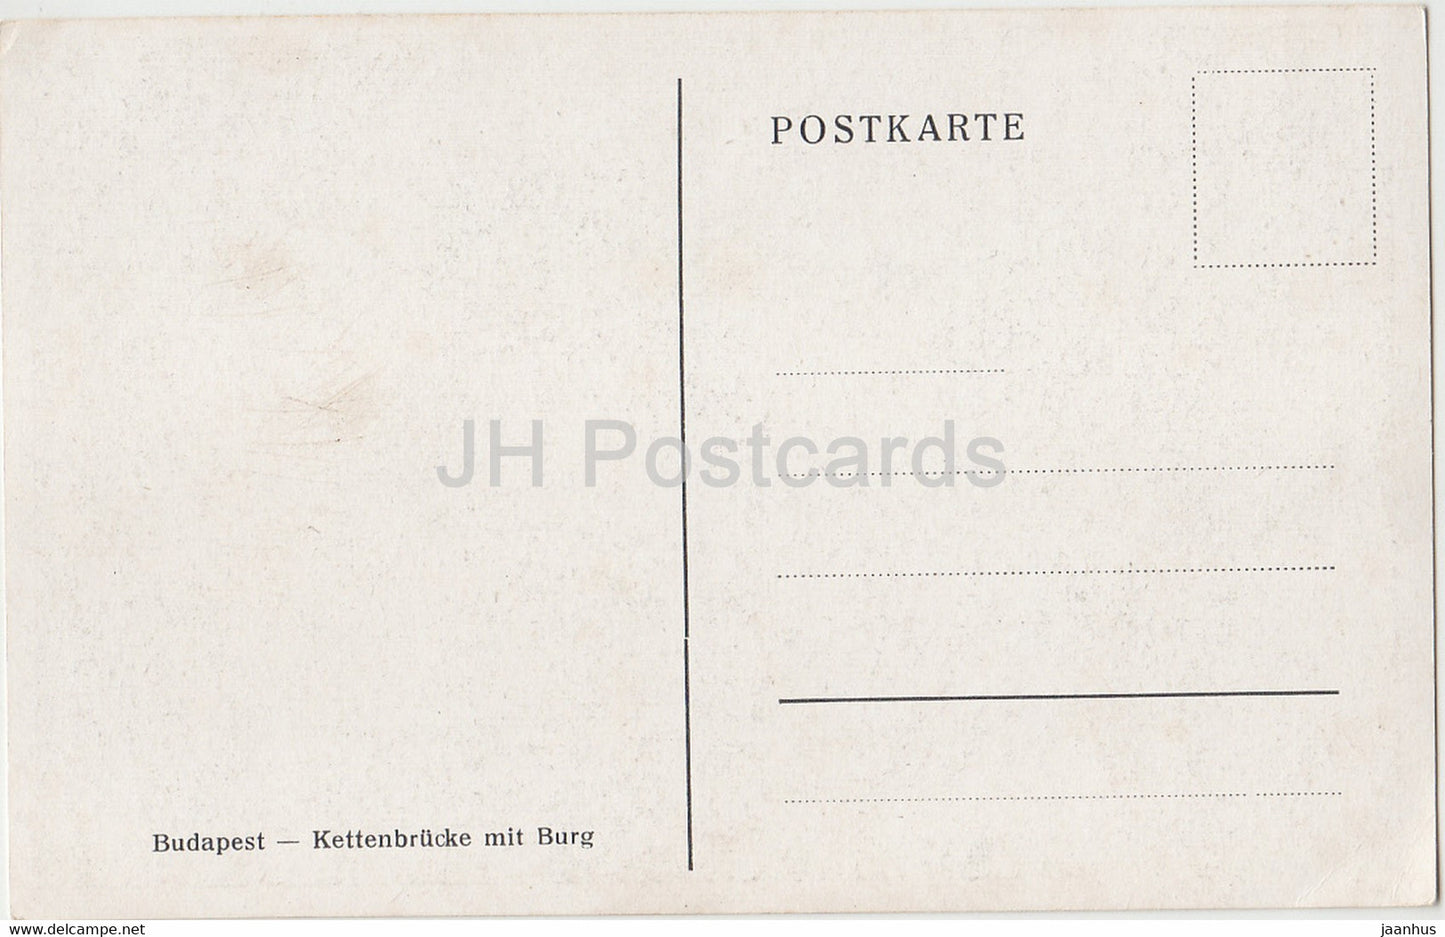 Budapest - Kettenbrucke mit Burg - ship - steamer - old postcard - Hungary - unused